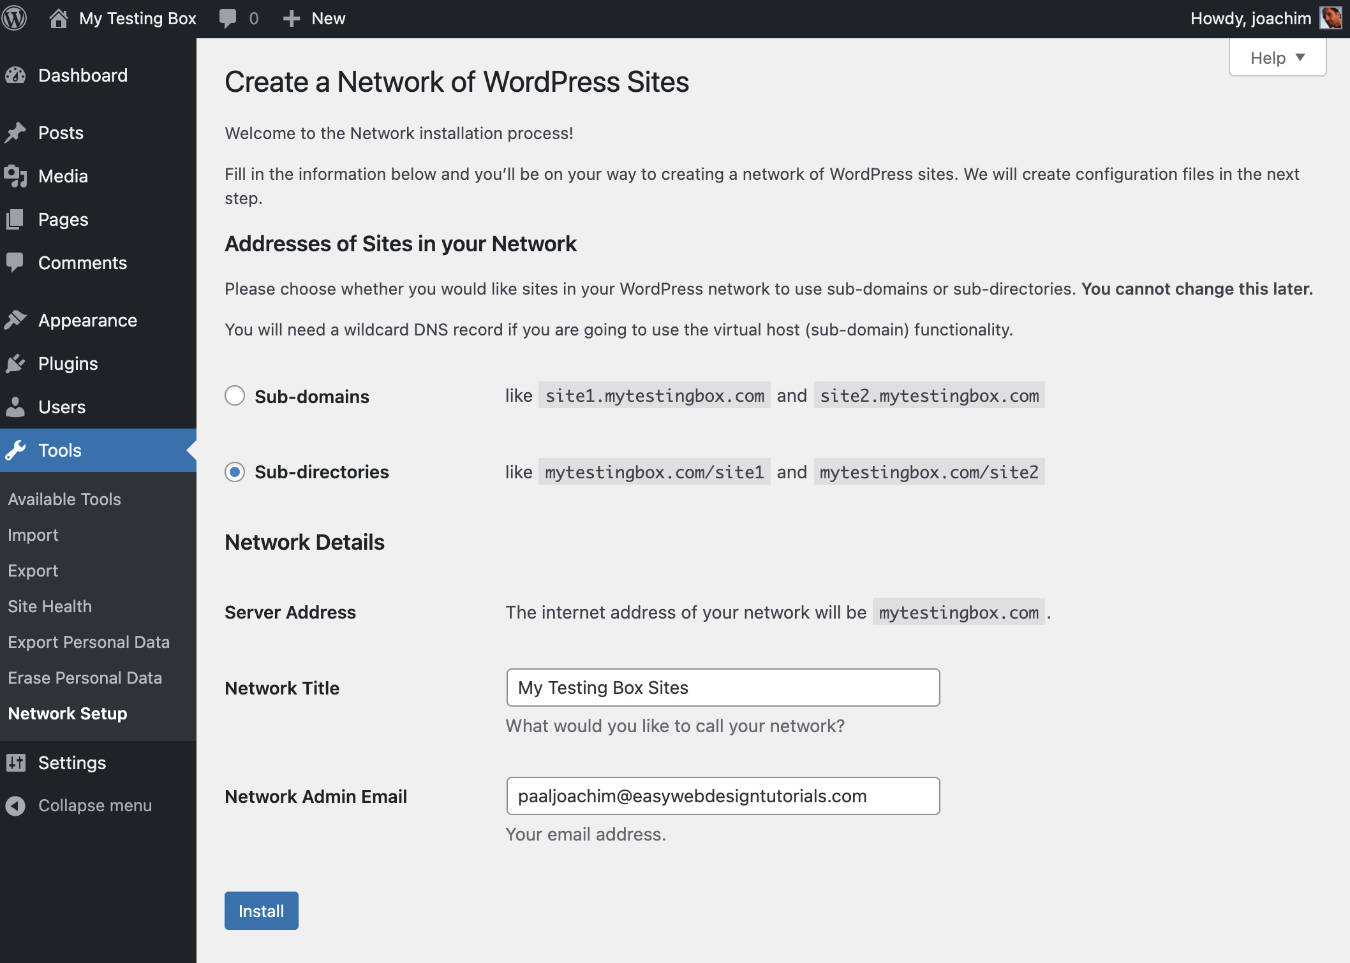 The setup screen to create a Network of WordPress Sites.